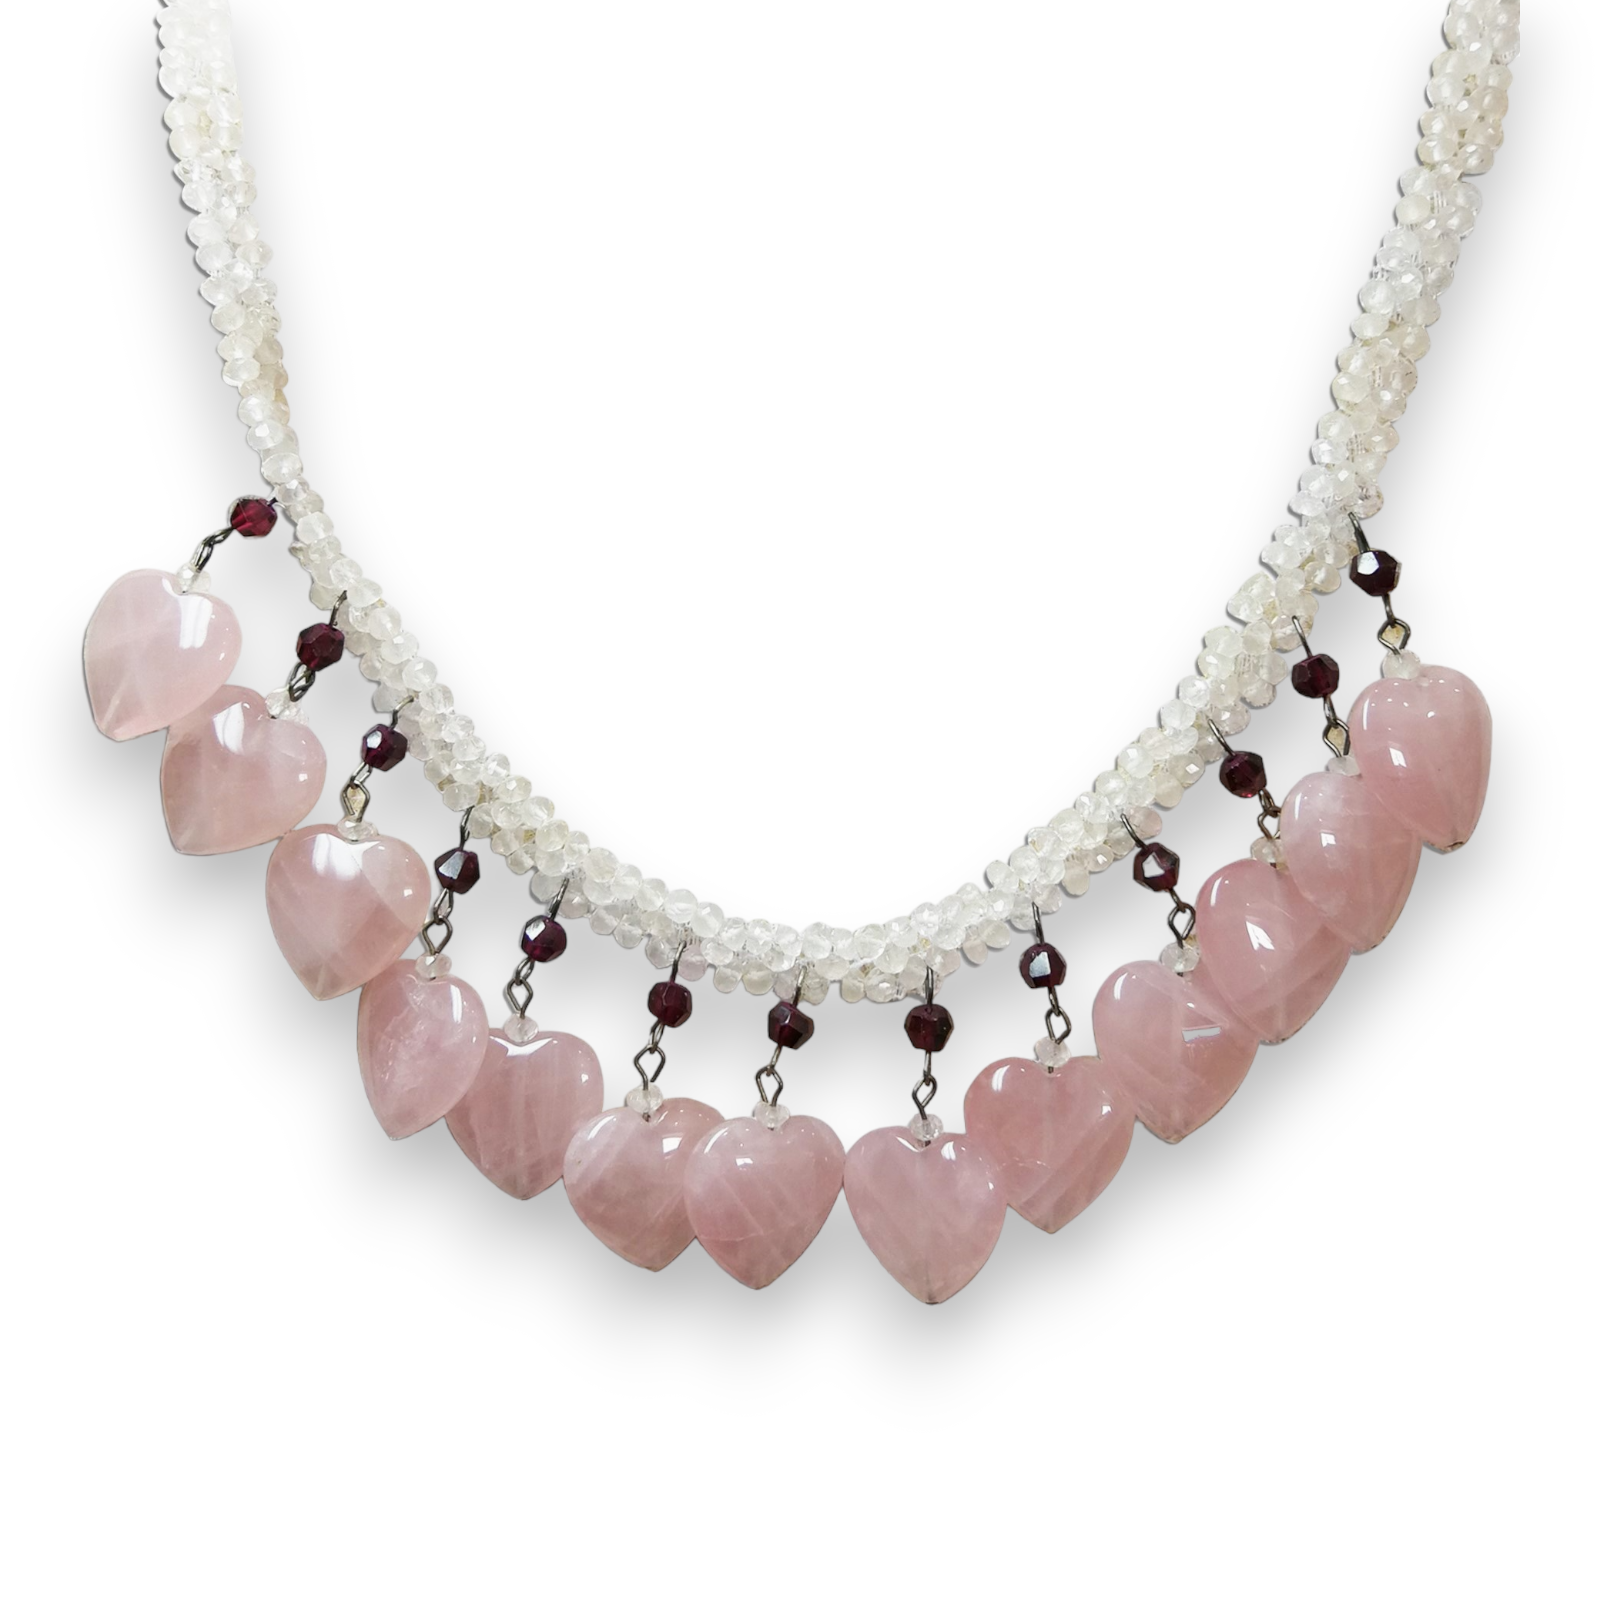 Natural Handmade Necklace 16"-18" Rose Quartz and Garnet with White Topaz Gemstone Beads Jewellery